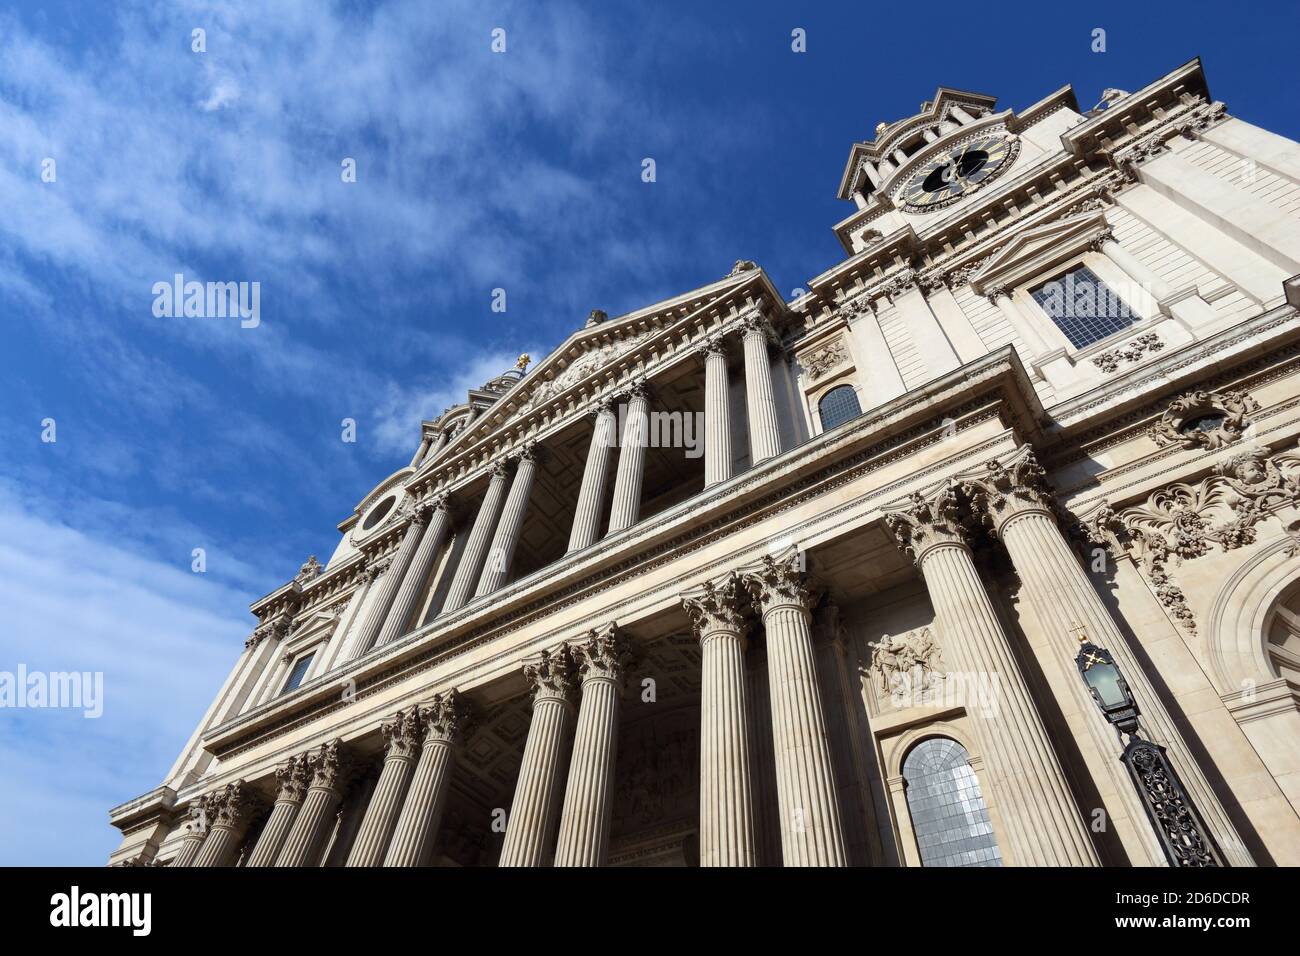 London, UK. Saint Paul's Cathedral facade architecture. London landmark. Stock Photo